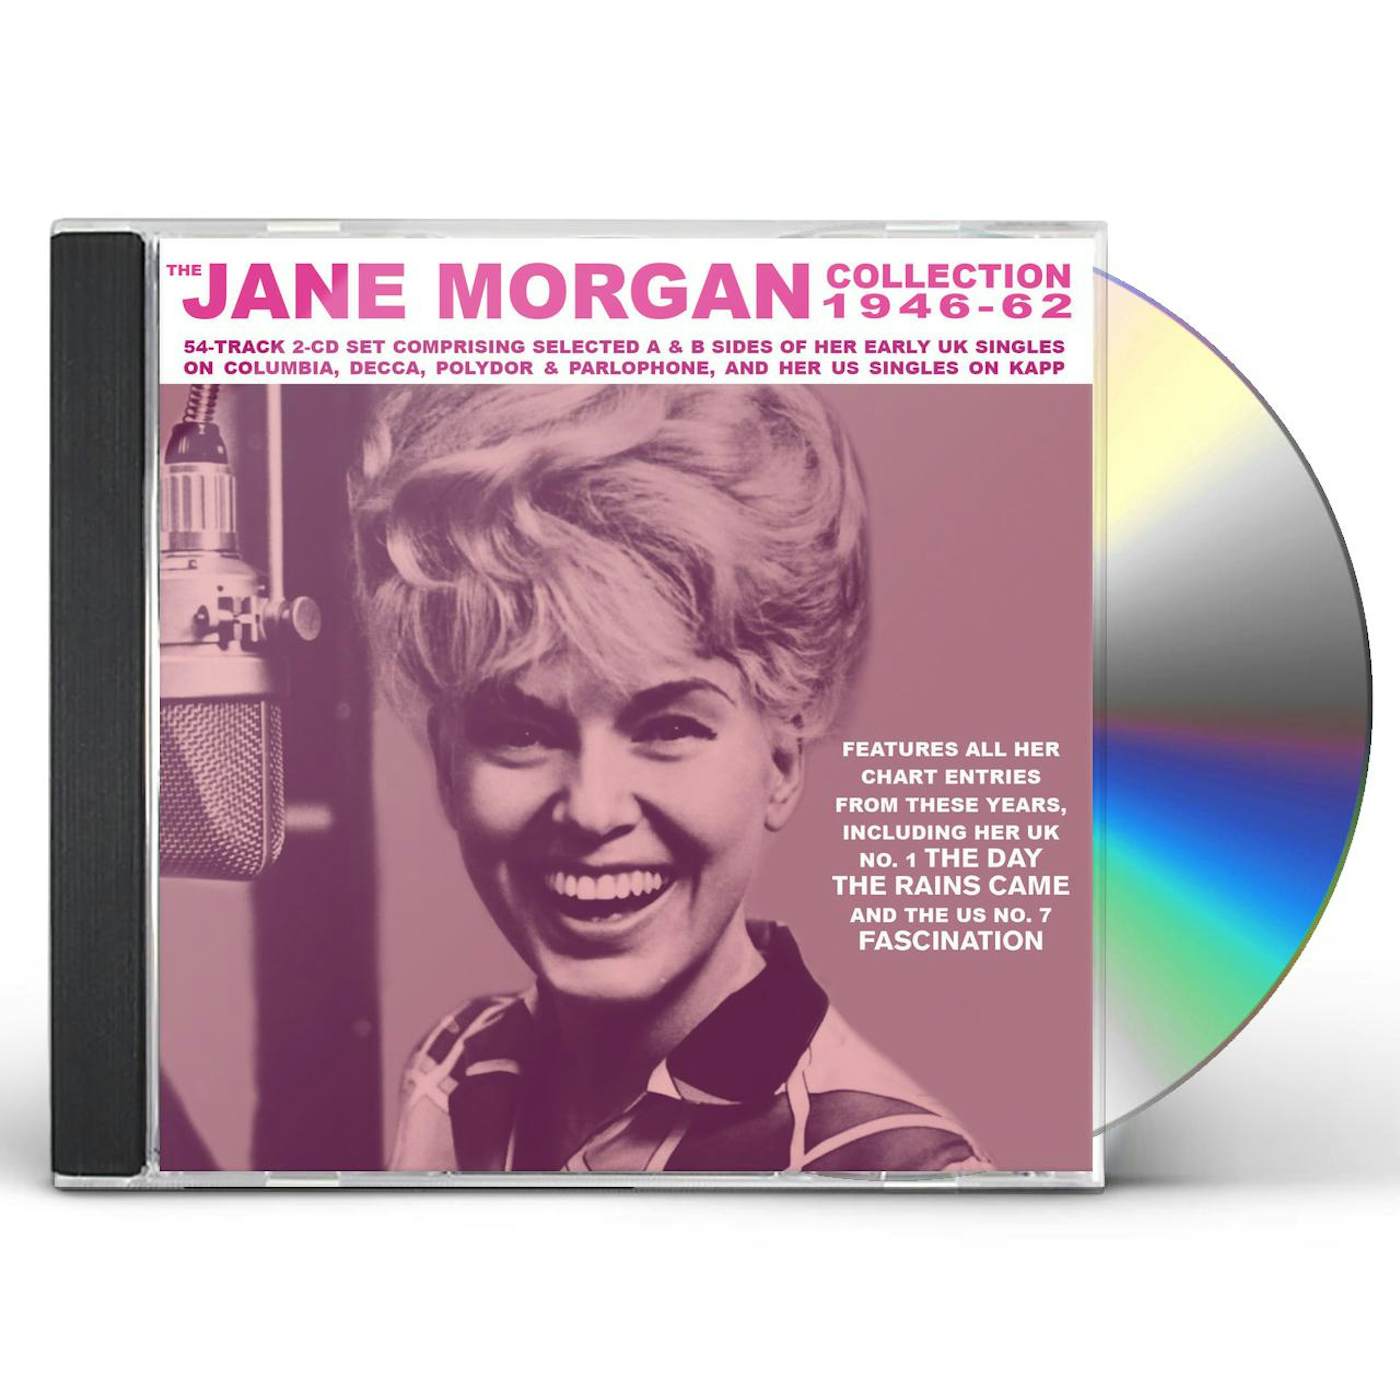 Jane Morgan COLLECTION 1946-62 CD